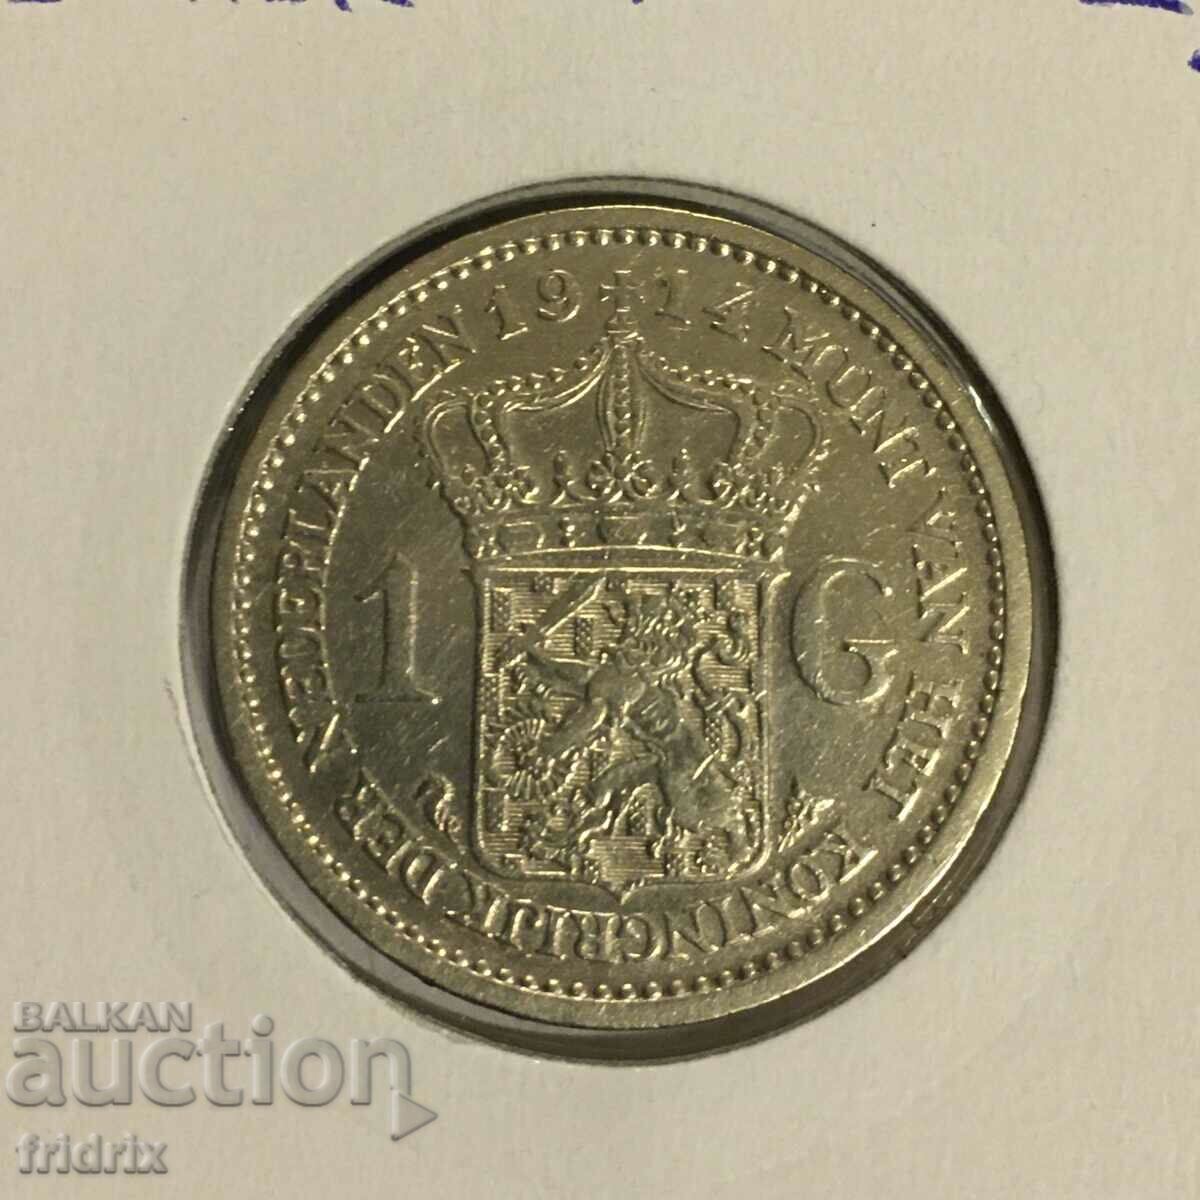 Țările de Jos 1 gulden 1914 / Olanda 1 gulden 1914